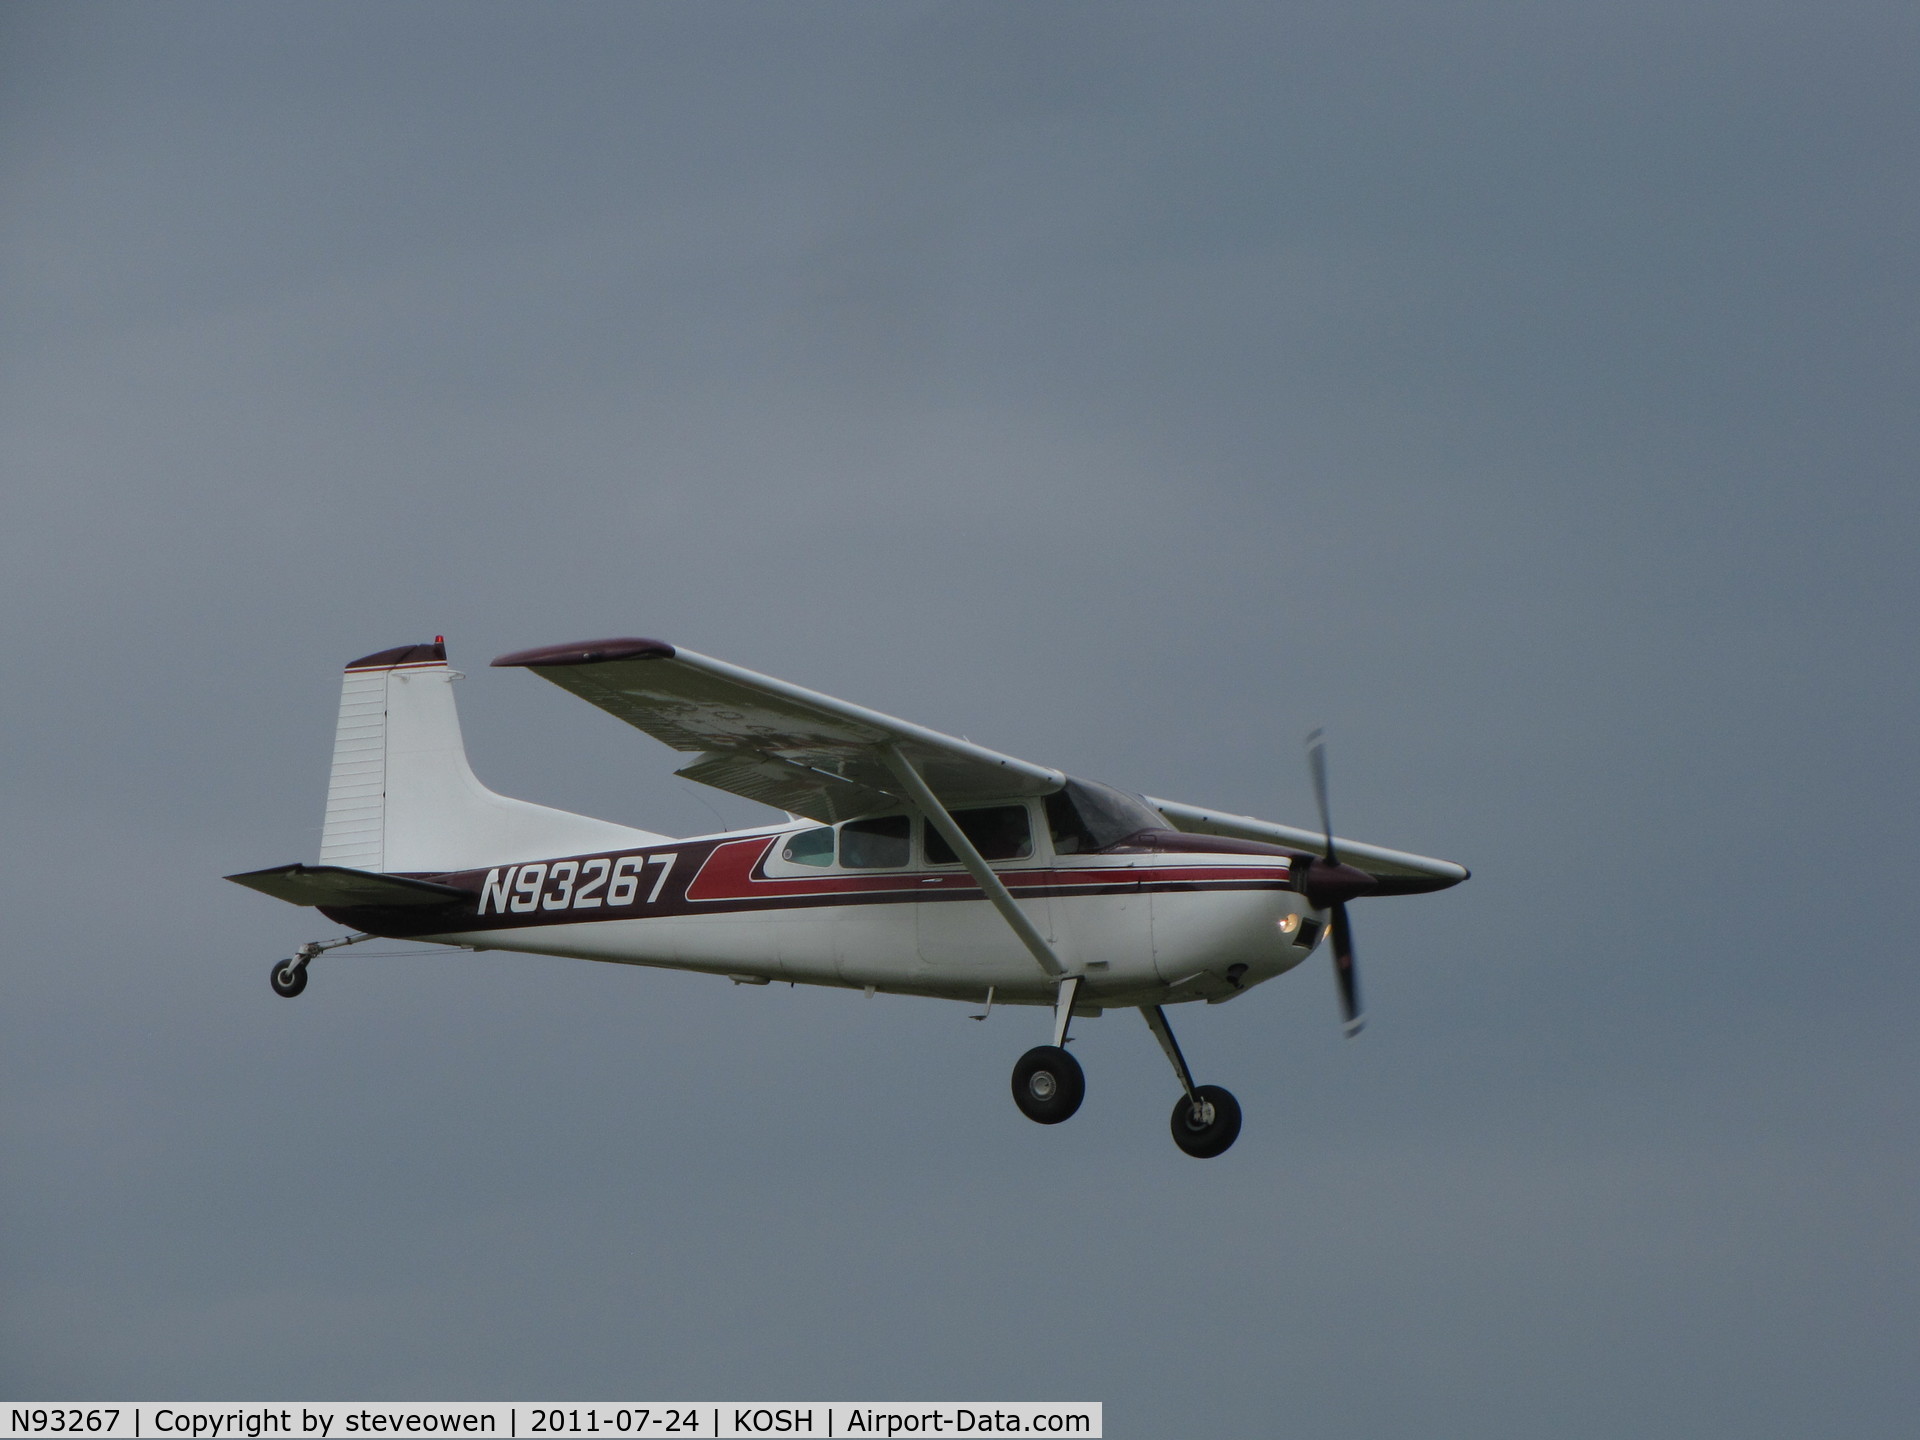 N93267, 1976 Cessna A185F Skywagon 185 C/N 18503204, landing Rwy 09 during EAA 2011